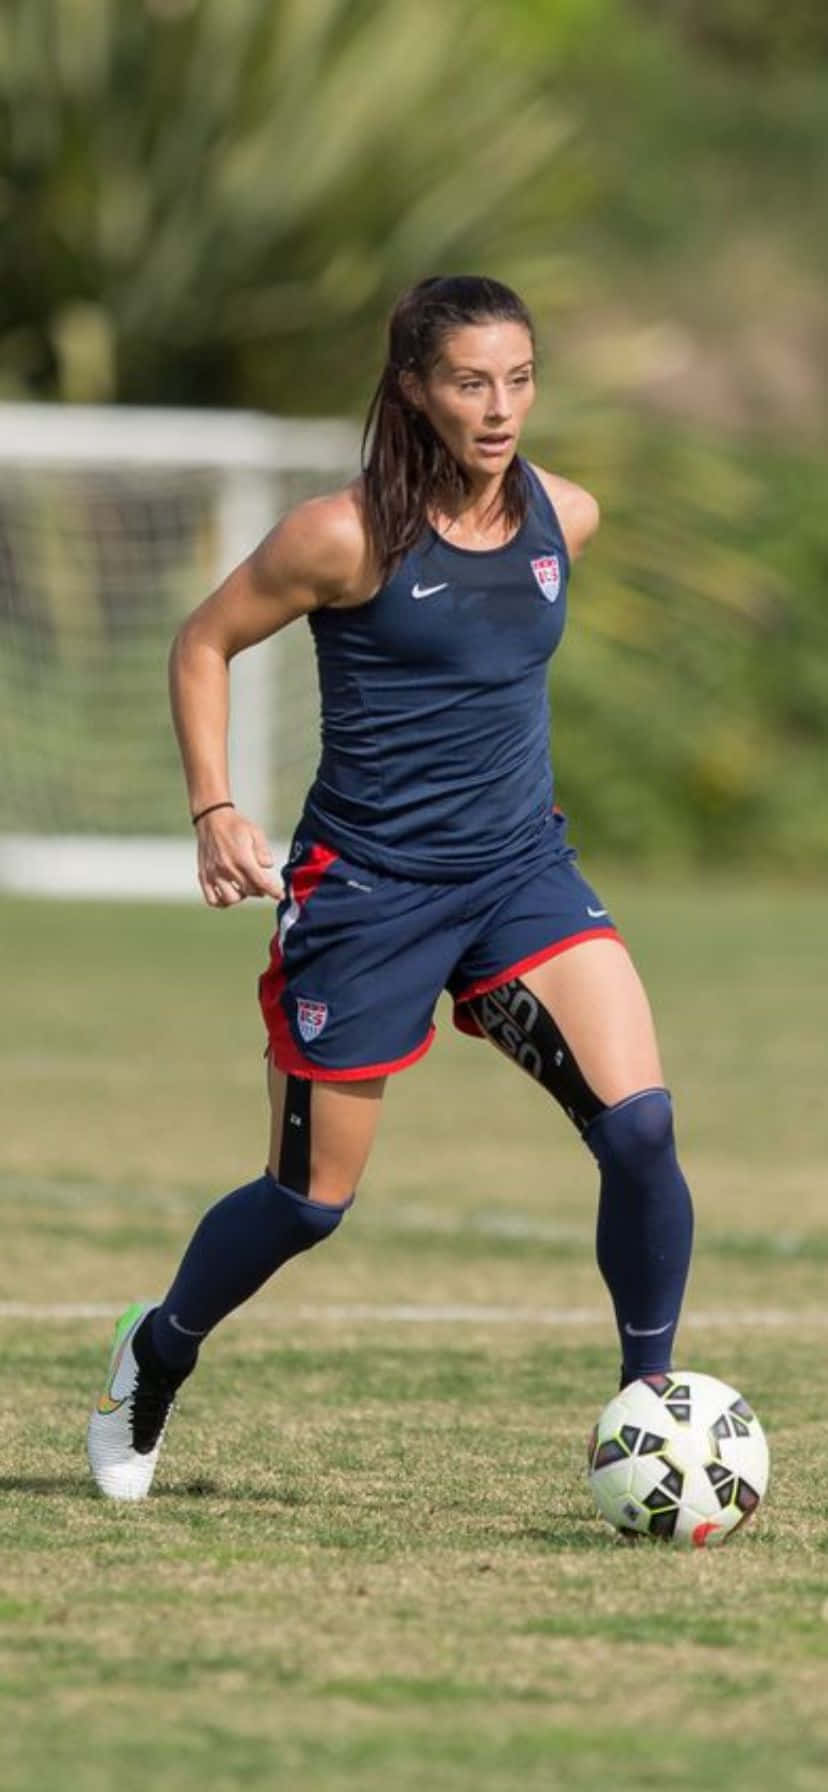 U S Womens Soccer Player Action Shot Wallpaper